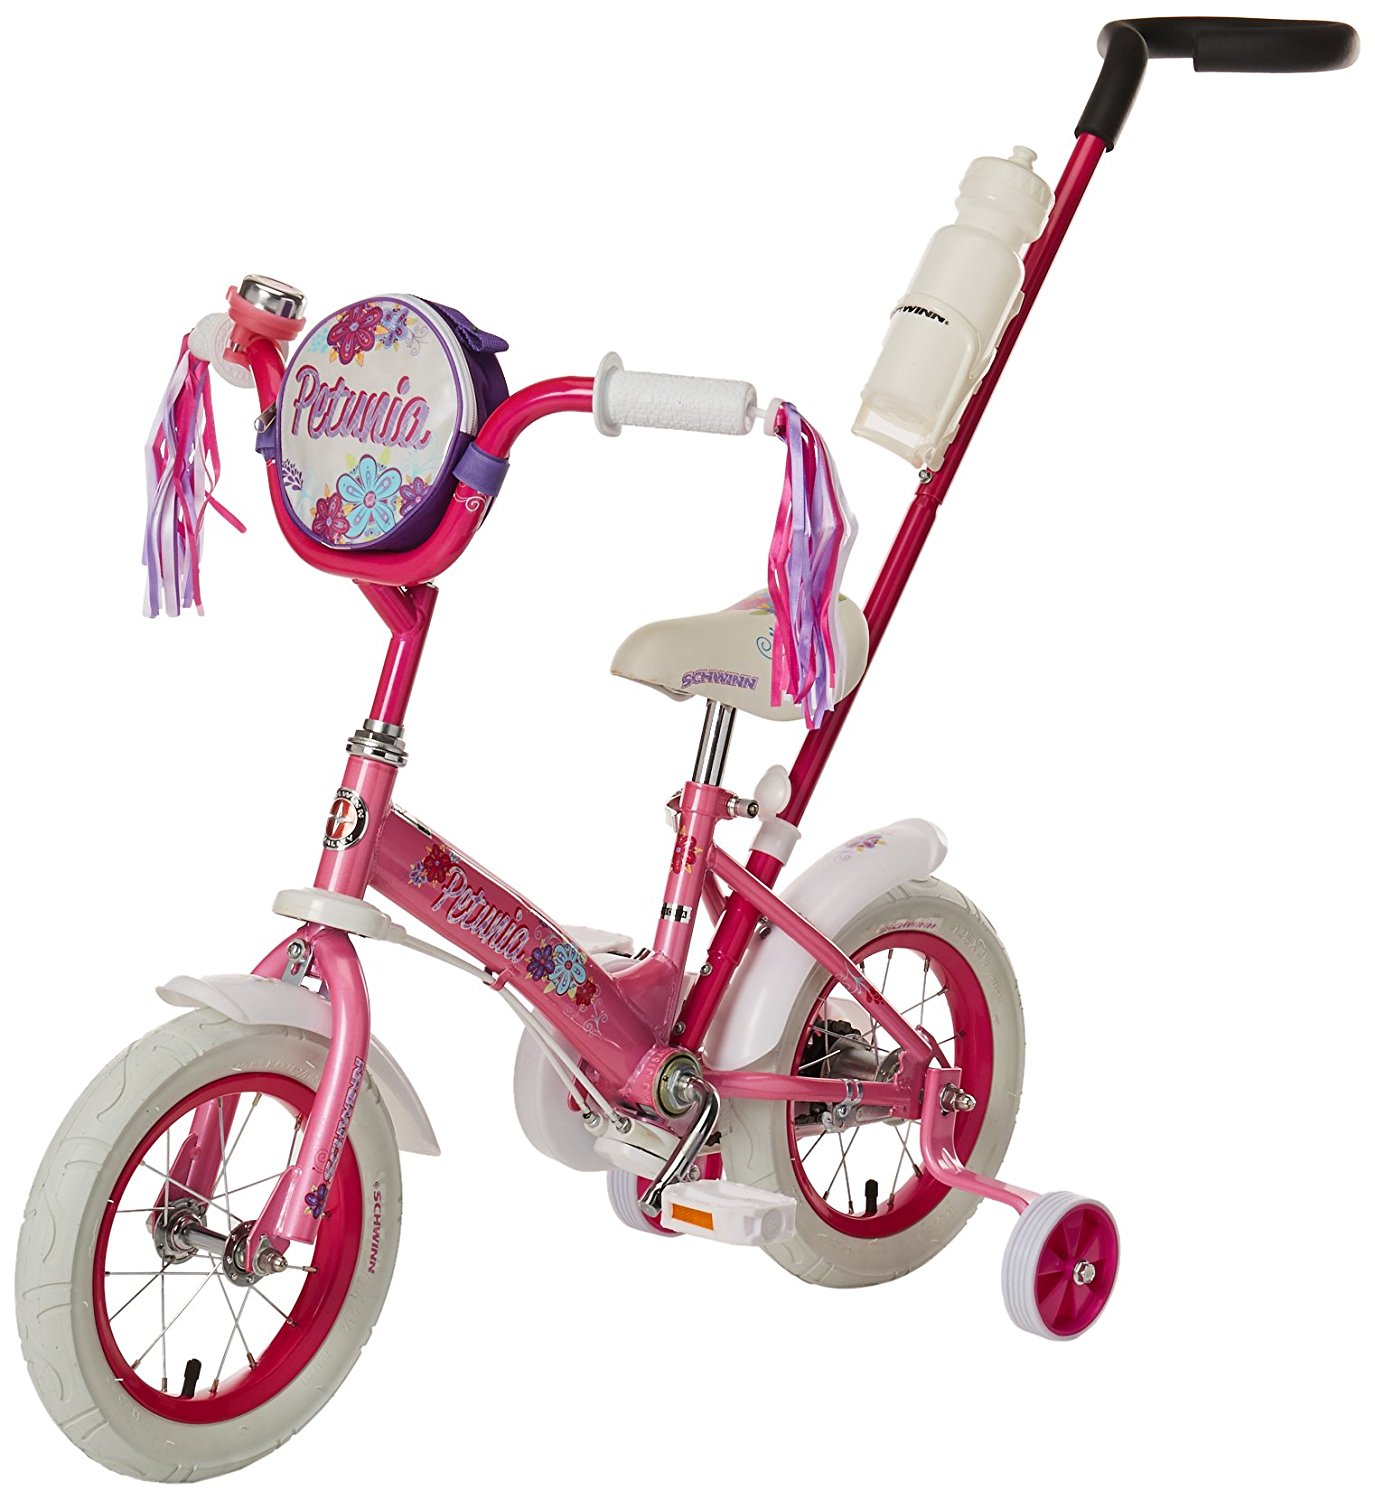 Review of Schwinn Girls' Petunia 12-inch Steerable Bike,Pink/White